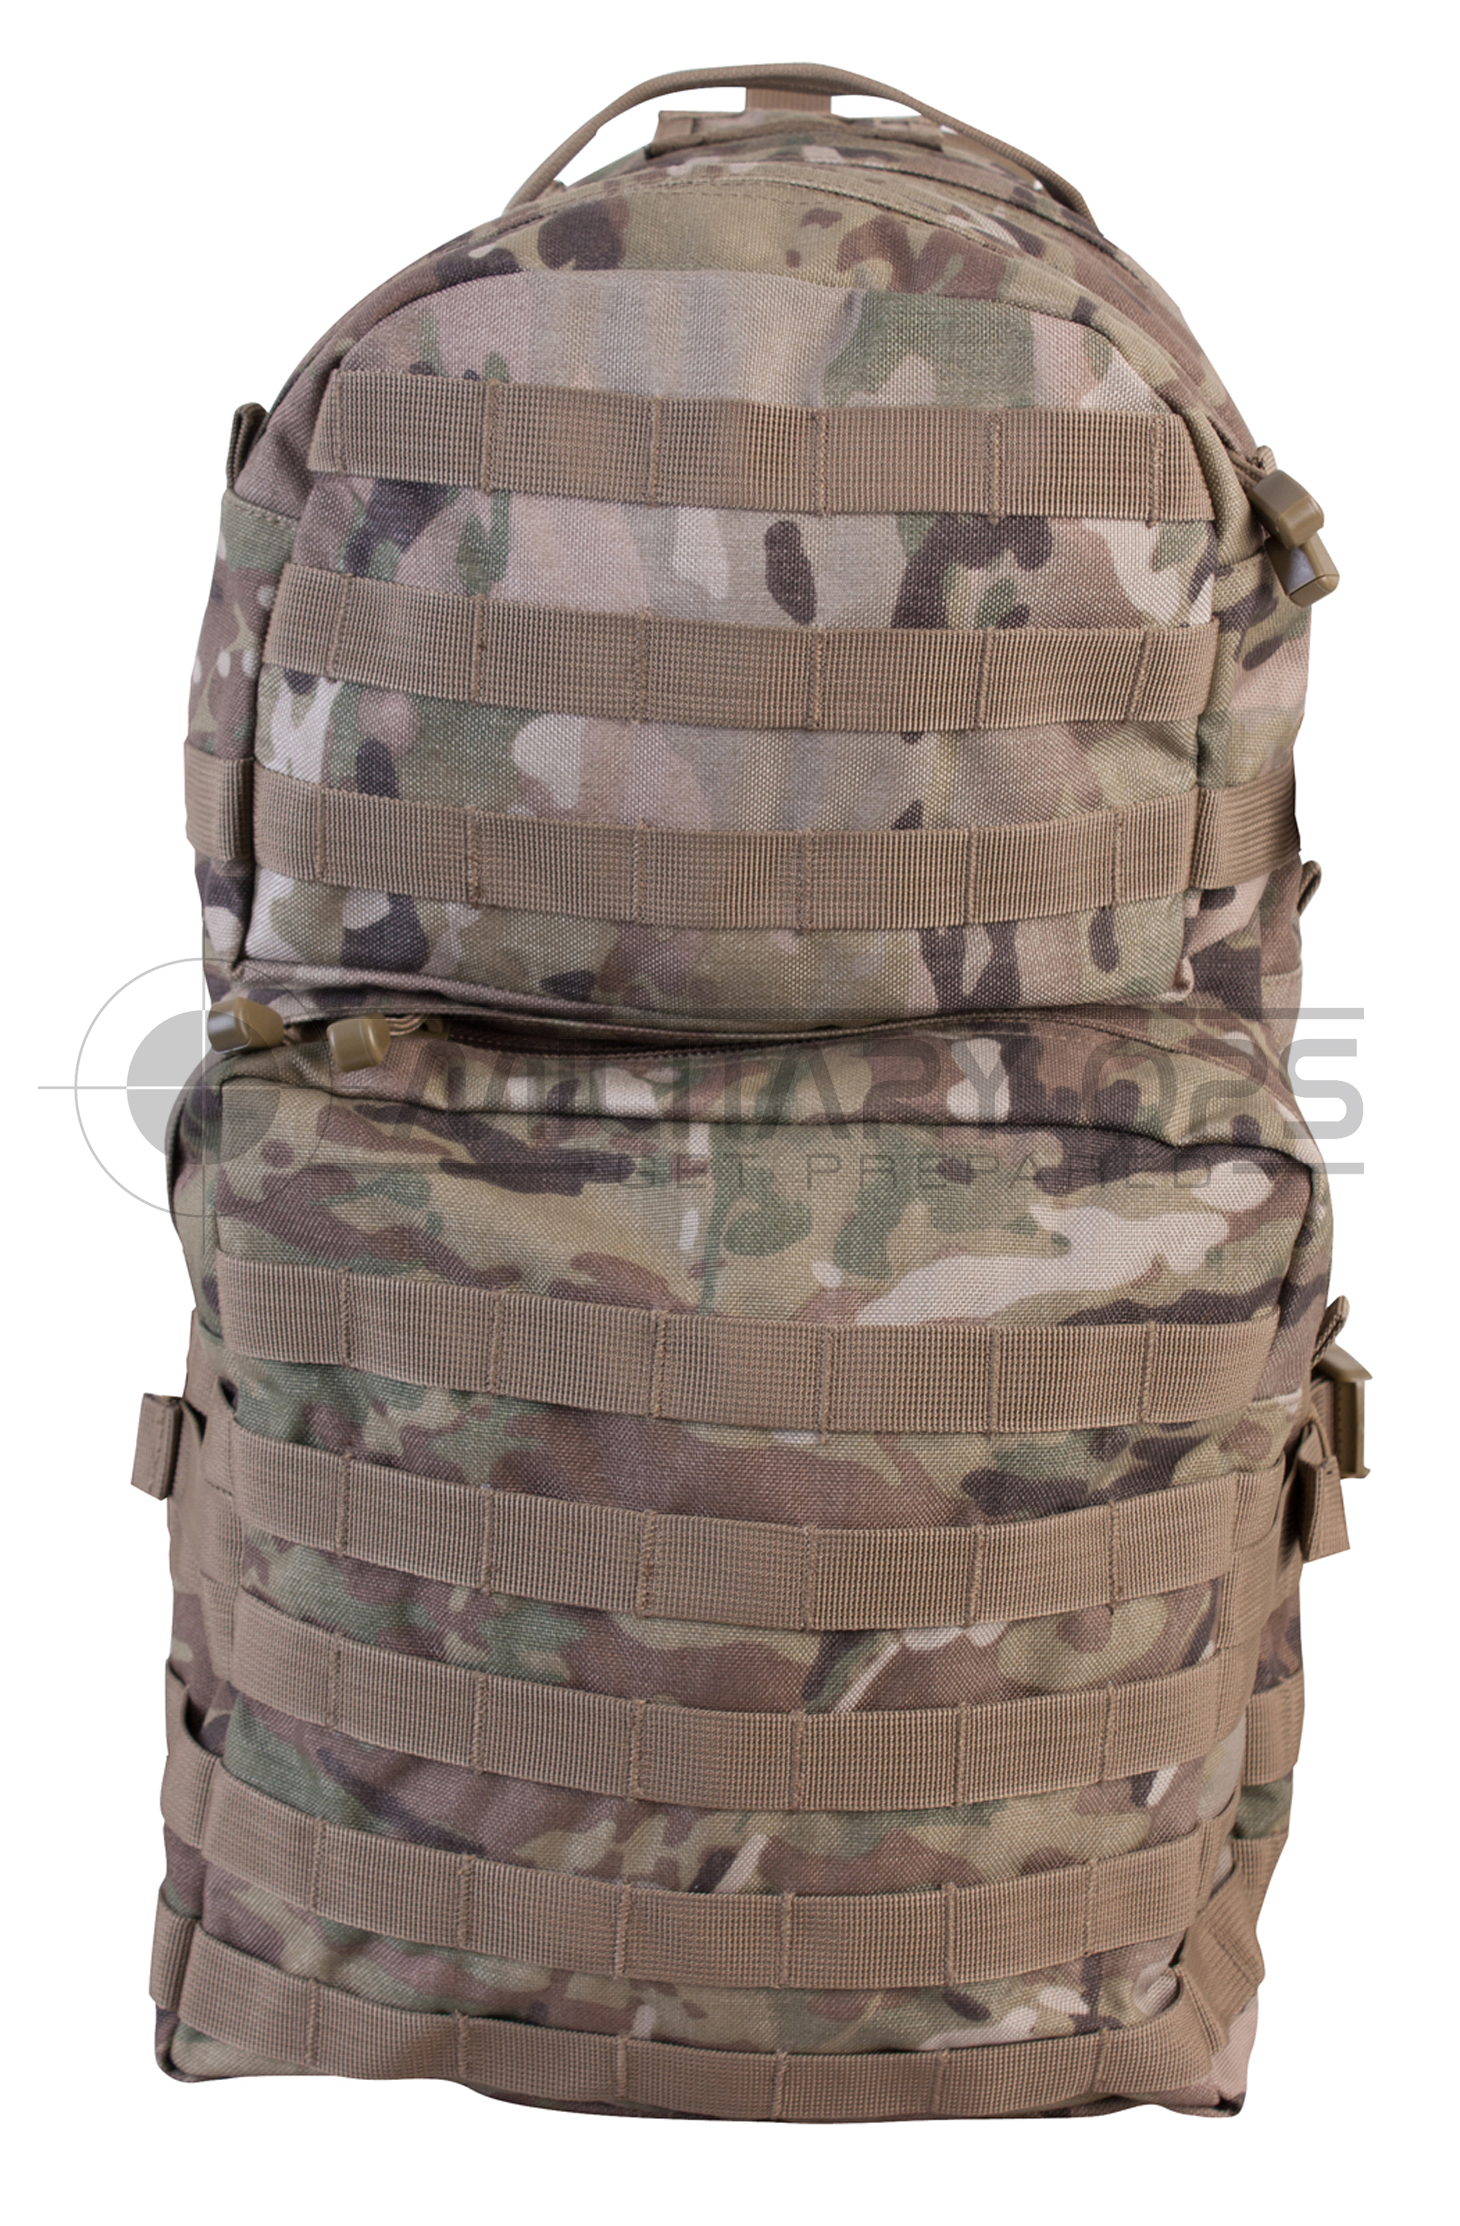 Assault Patrol Pack 40 Litre MTP MULTICAM RUCKSACK MEDIUM MOLLE | eBay